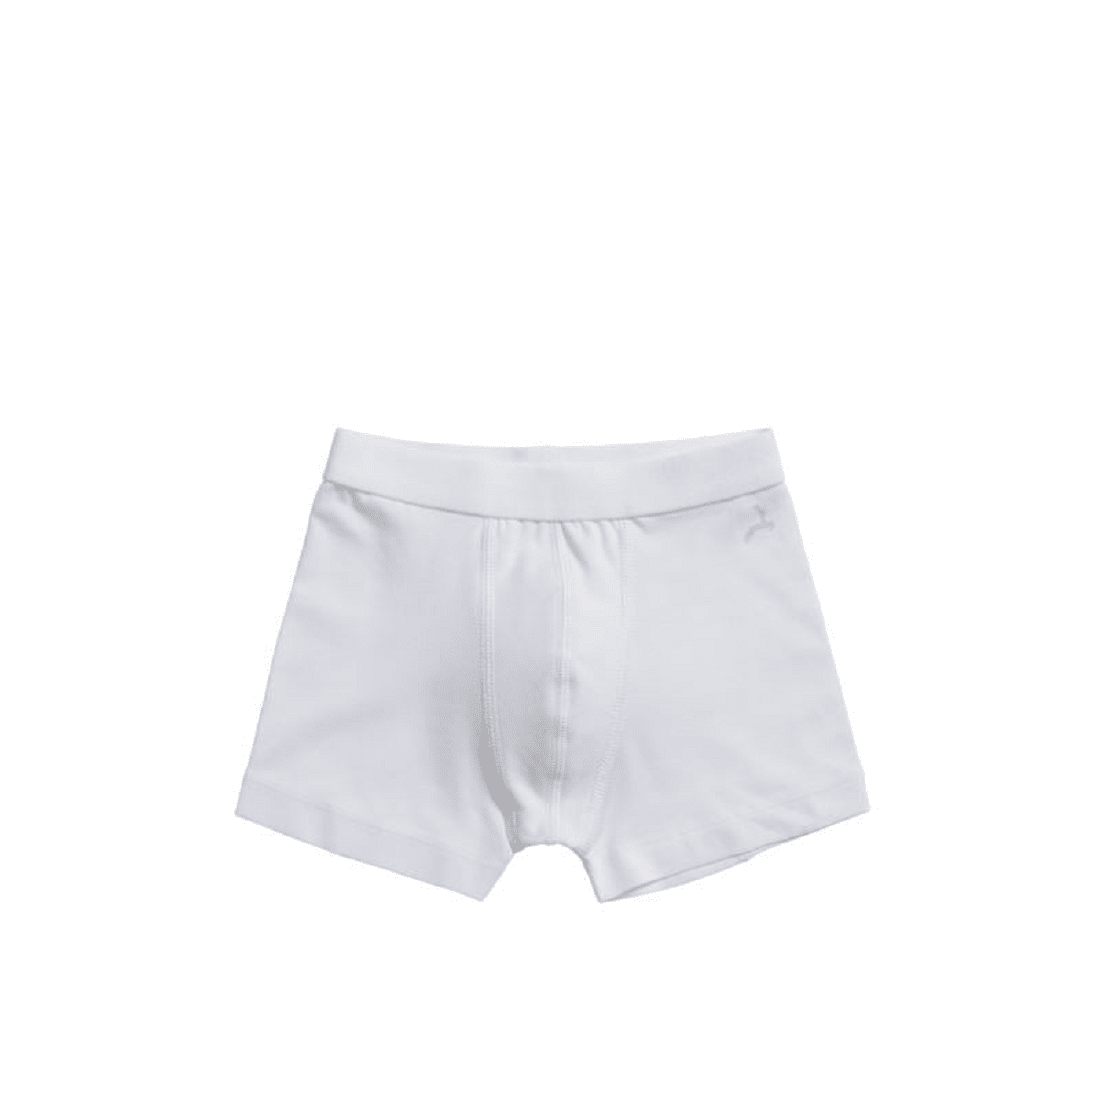 Ten Cate - 30036 - Boys Basic Shorts 2-pack - White Boxershort Ten Cate 